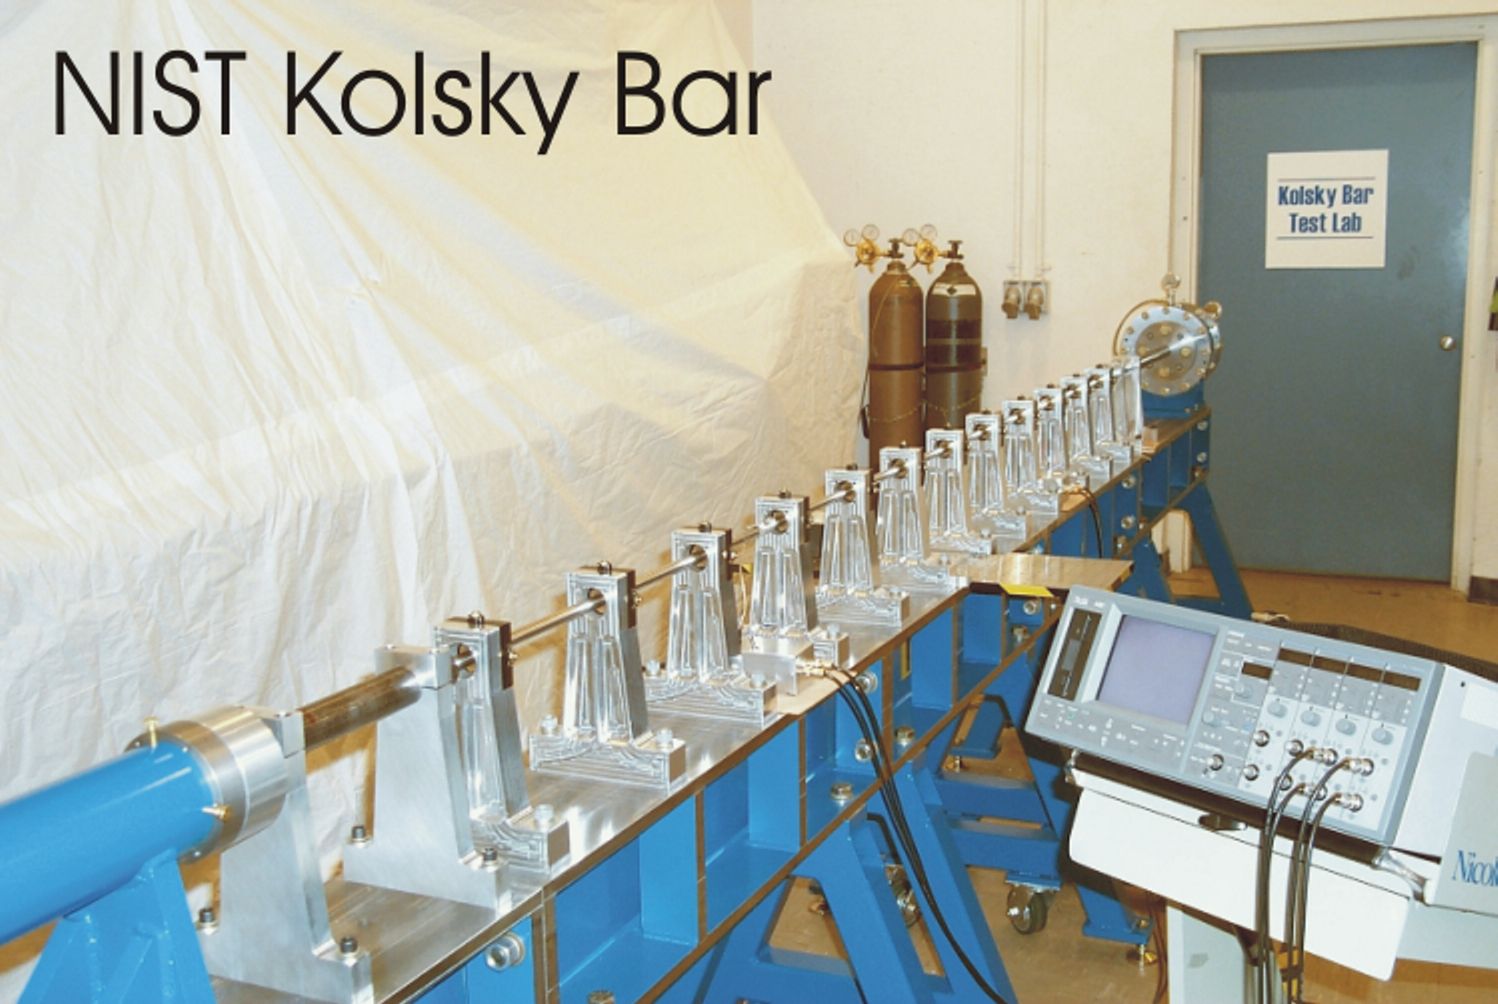 The NIST pulse-heated Kolsky bar